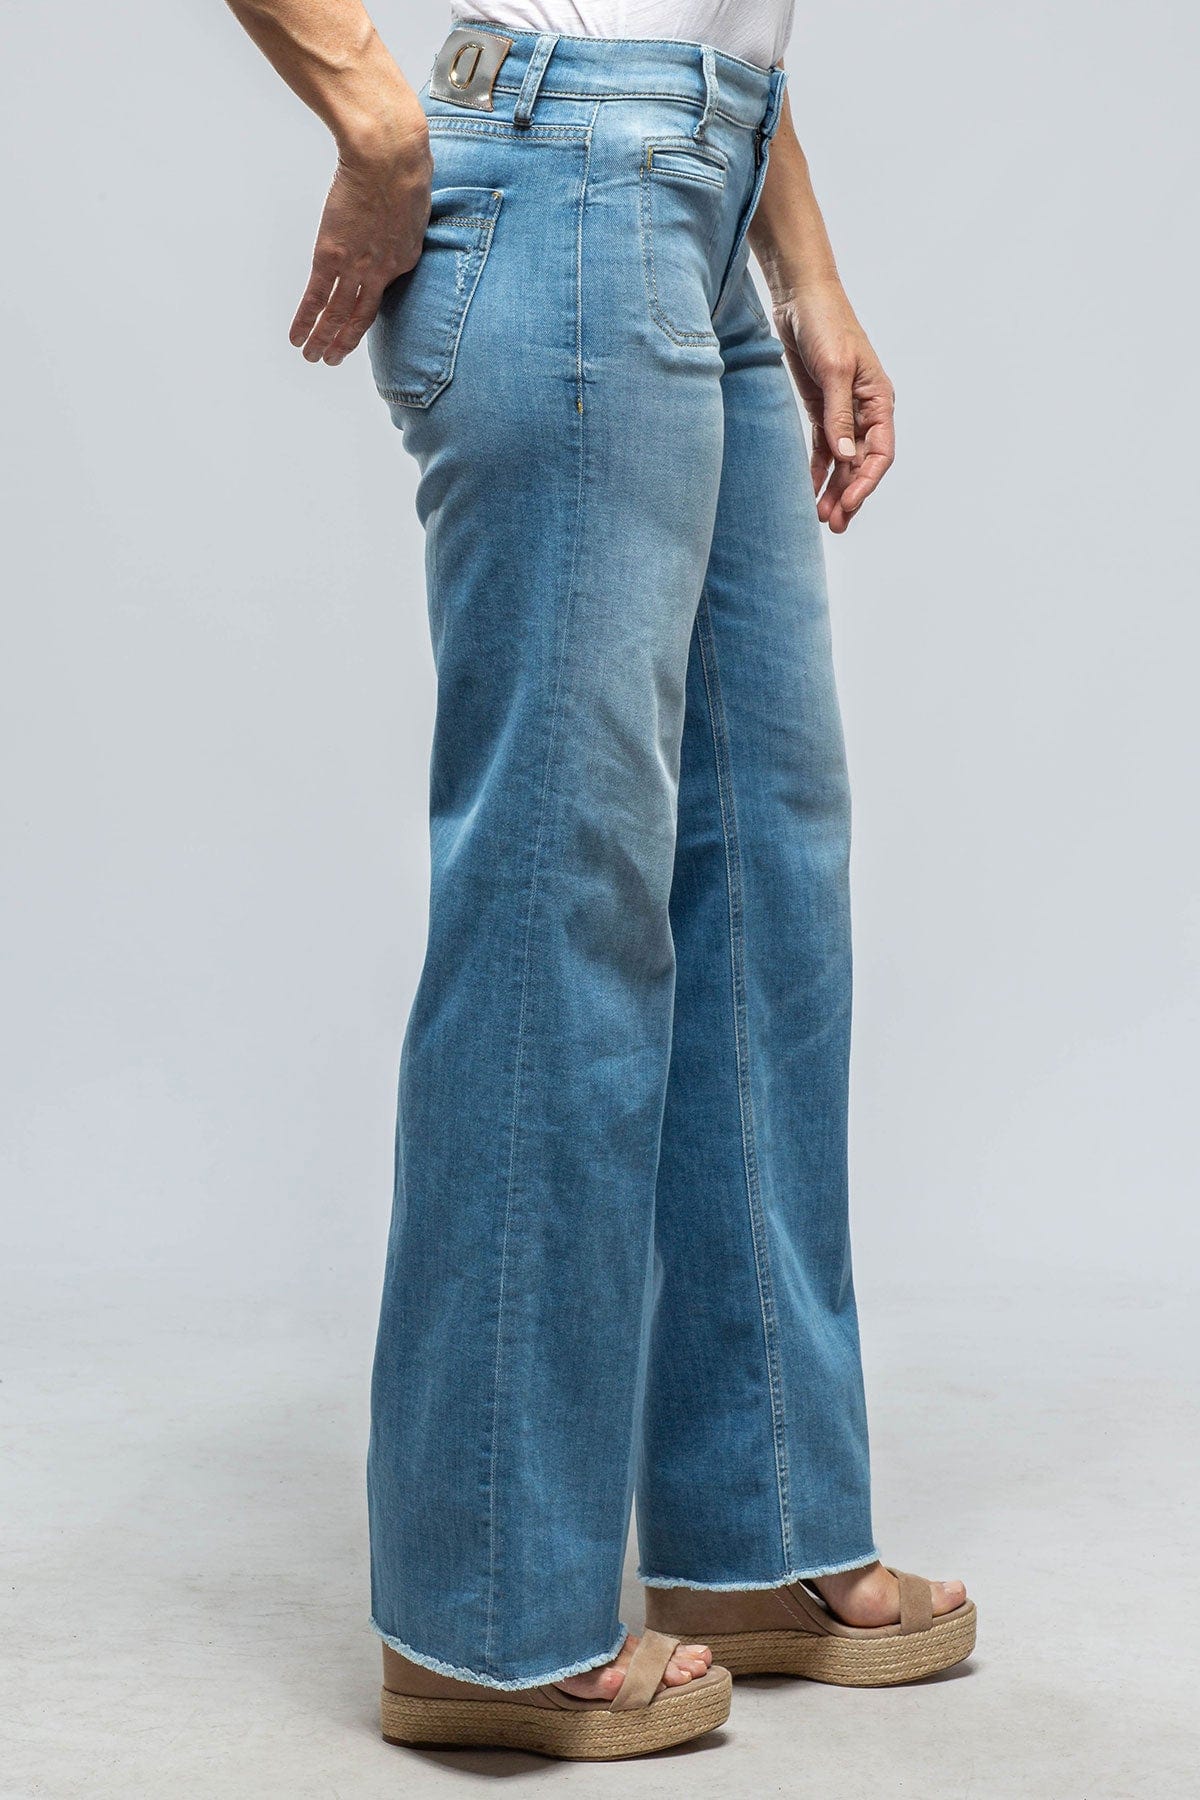 Tess Square Pocket Jean In Lt. Blue - AXEL'S